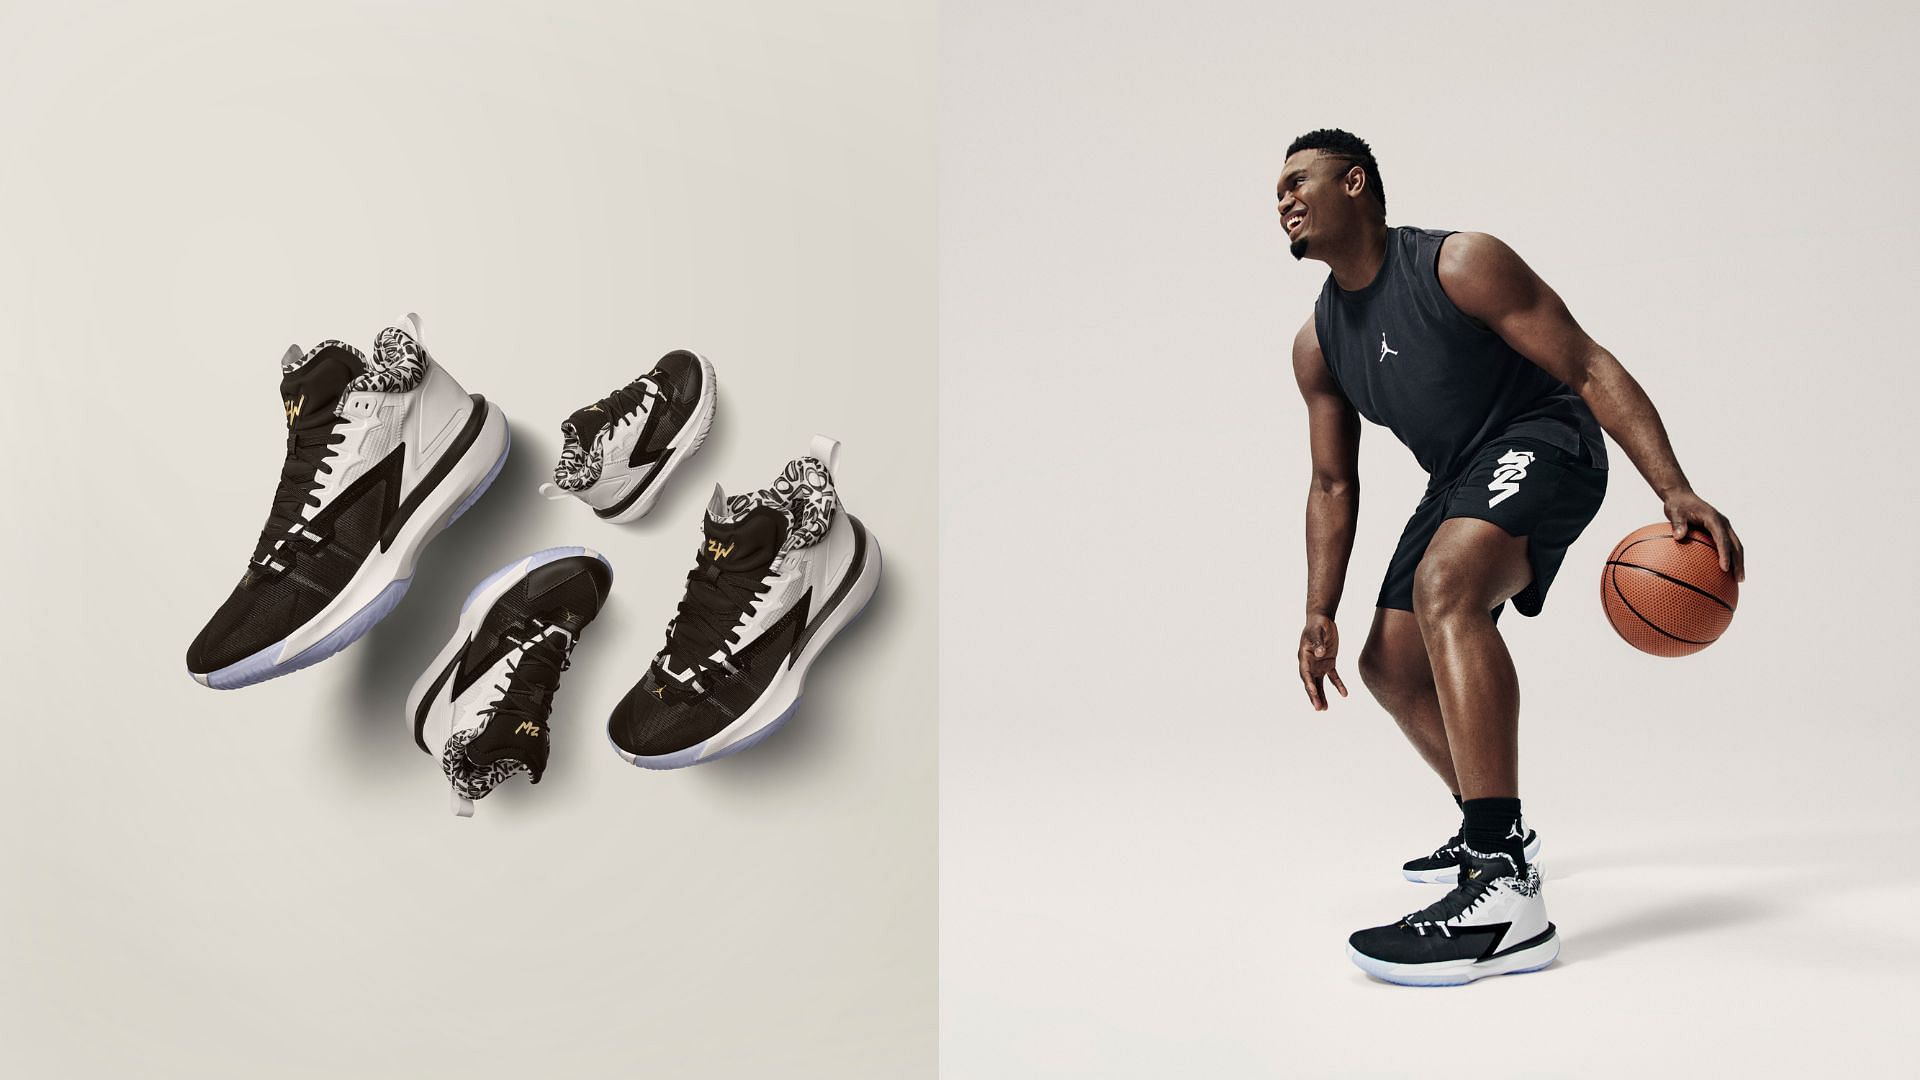 Jordan brand x Zion Williamson Zion 1 Gen Zion colorway (Image via Nike)